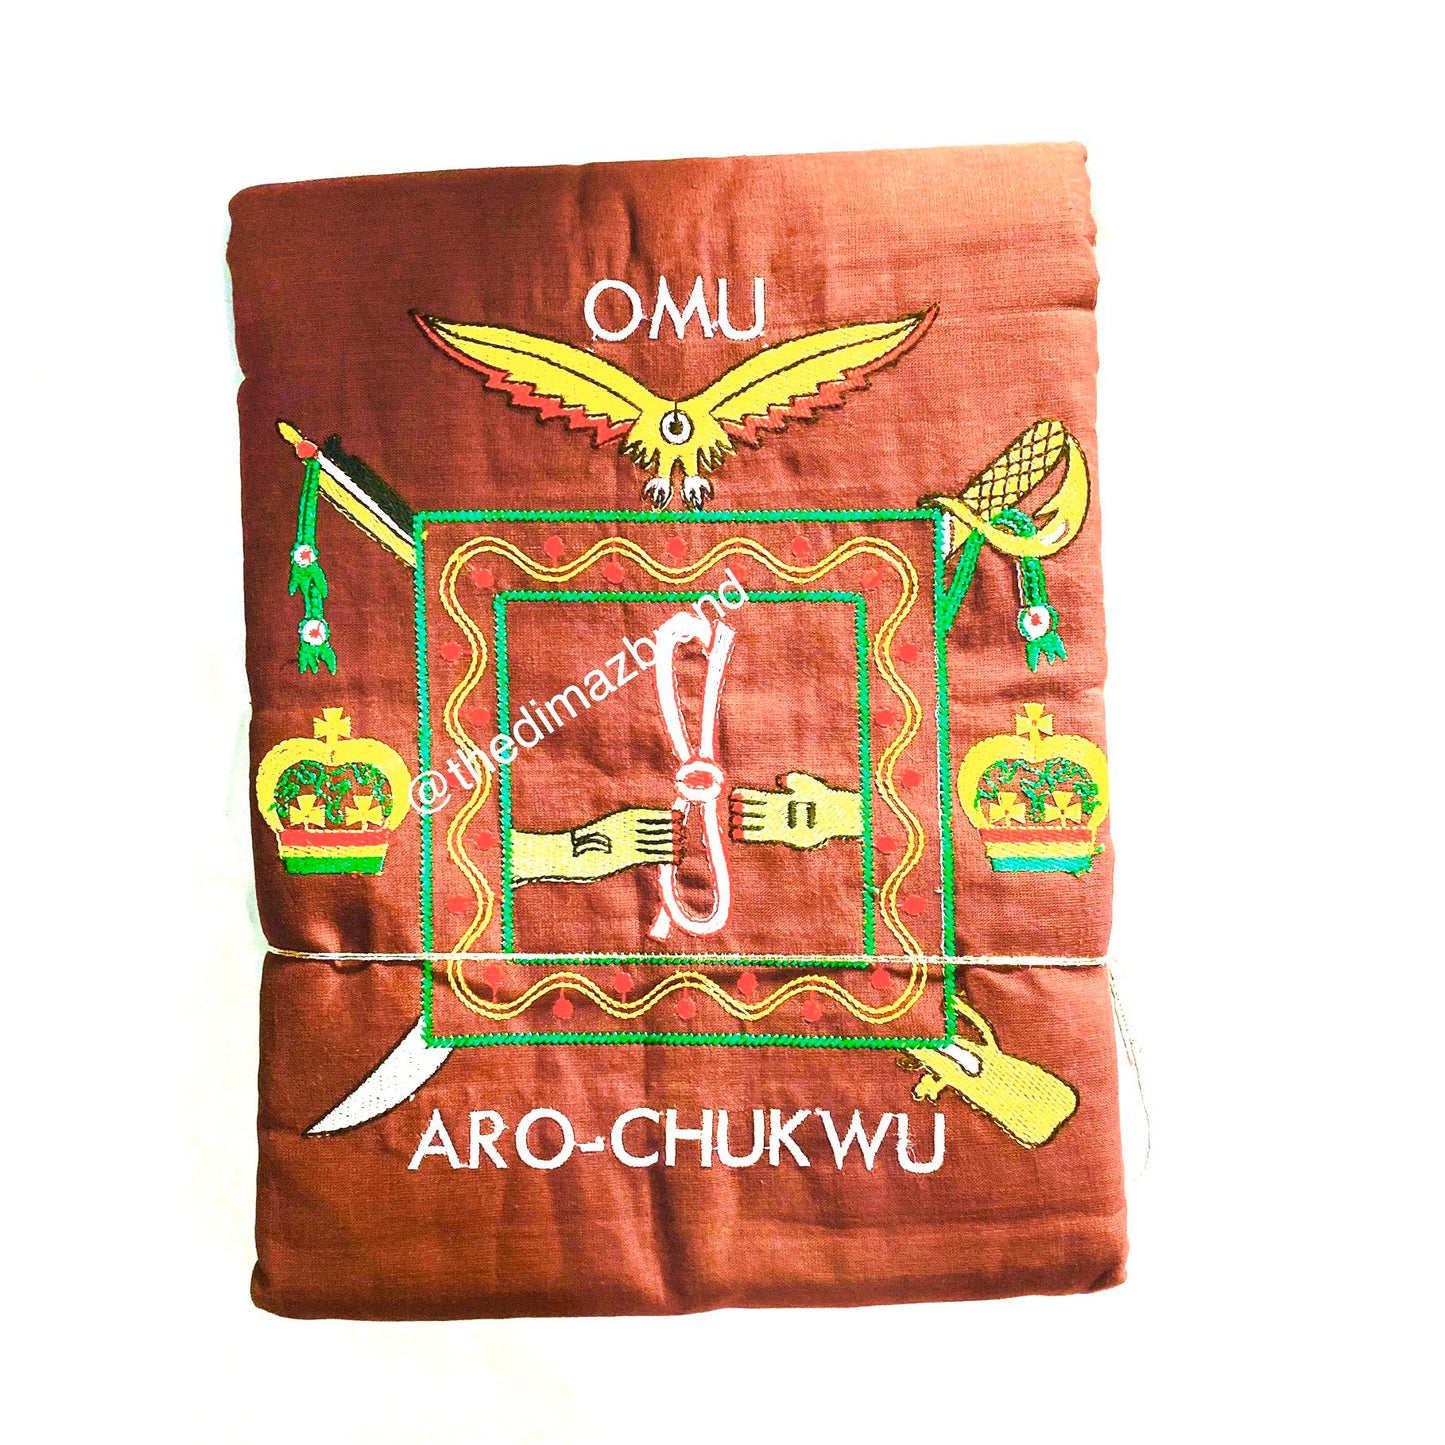 Omu aro arochukwu fabric arondizogu cultural fabric - Dimaz